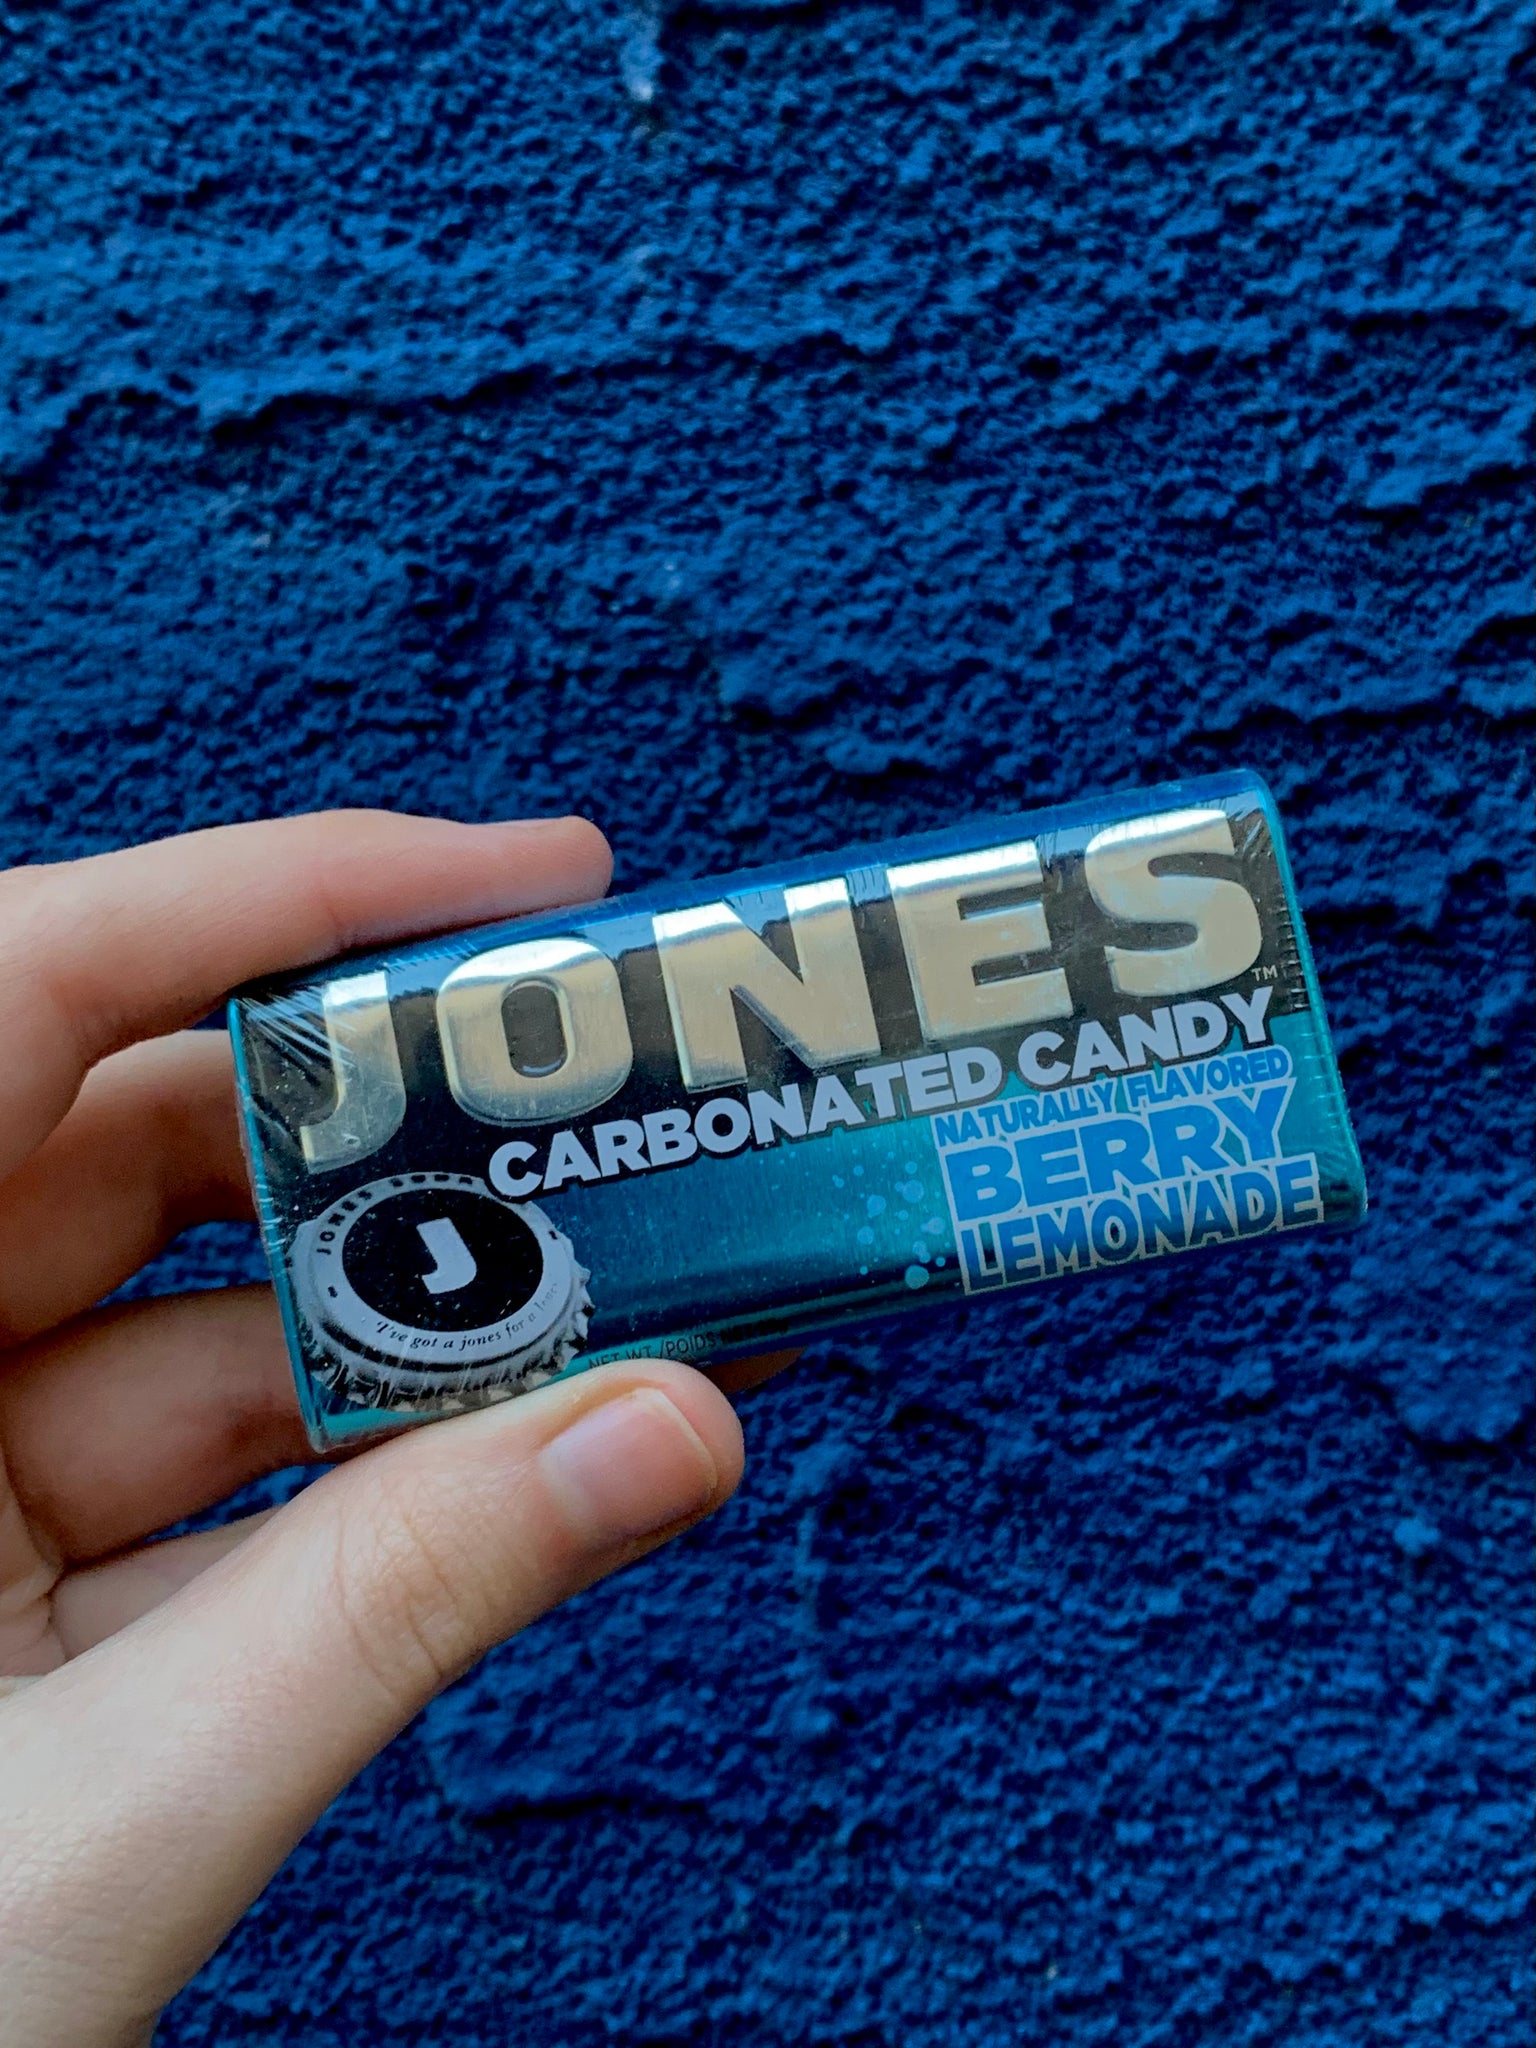 Jones Carbonated Candy - Berry Lemonade